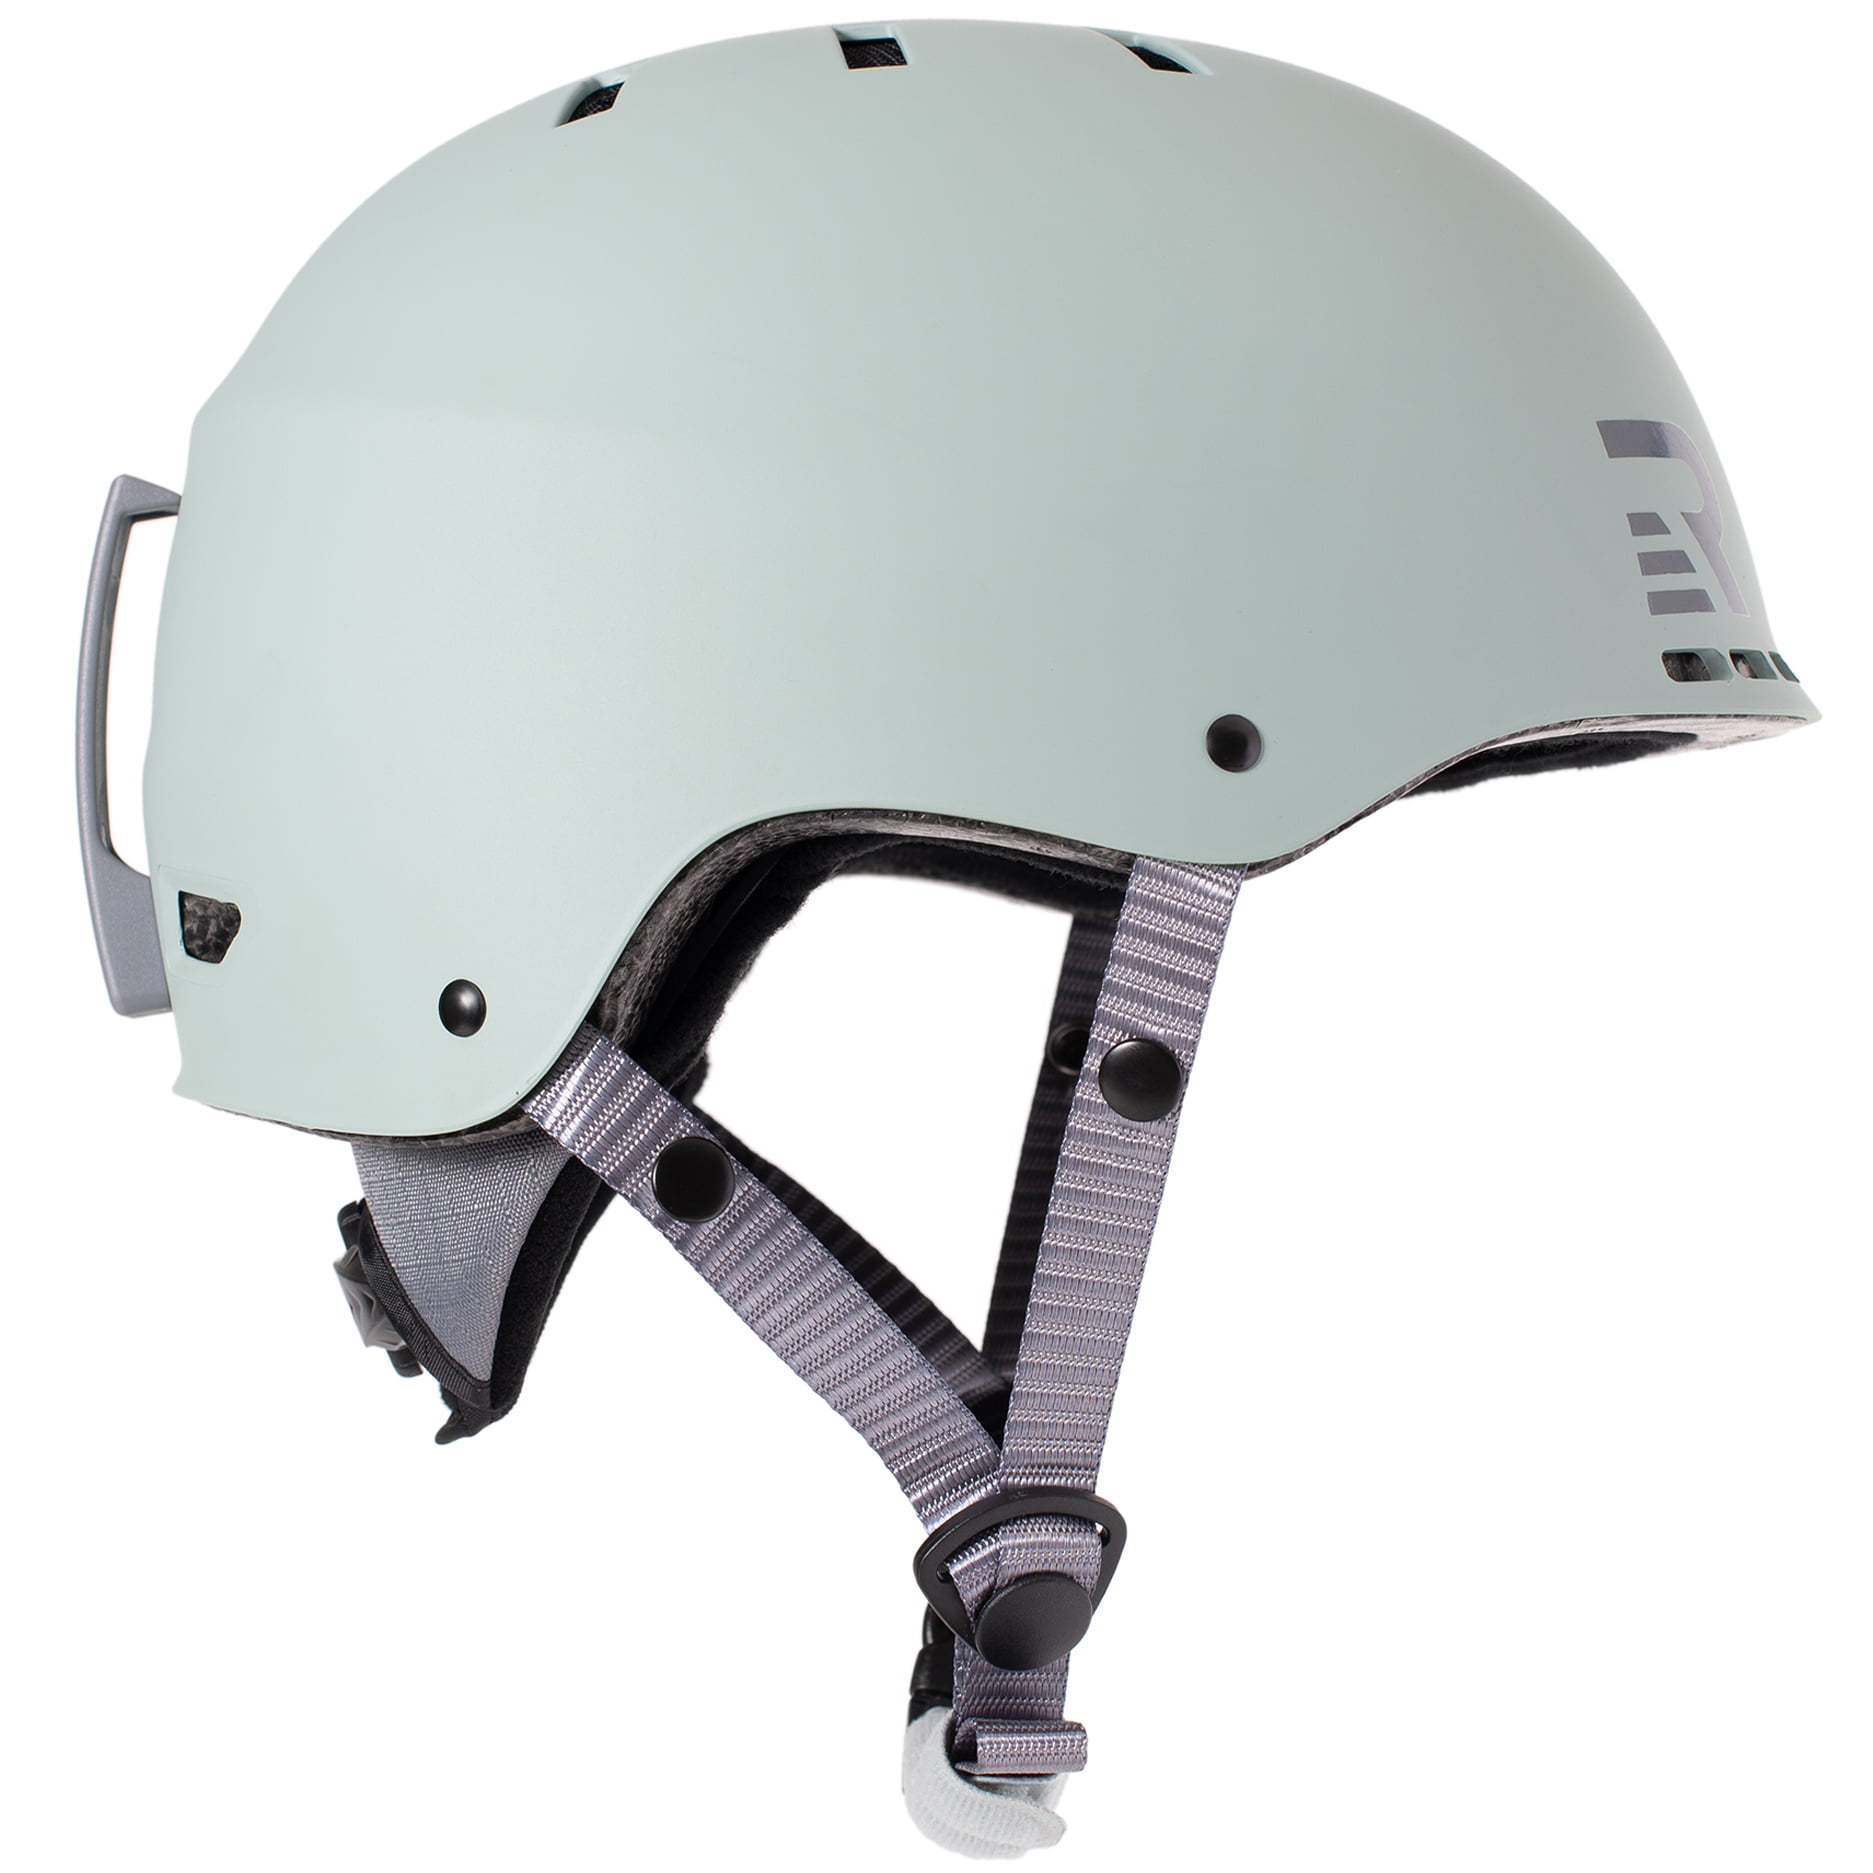 56-60cm Model:3008 Large/X-large Matte Moss Retrospec Traverse H2 2-in-1 Convertible Helmet with 10 Vents 